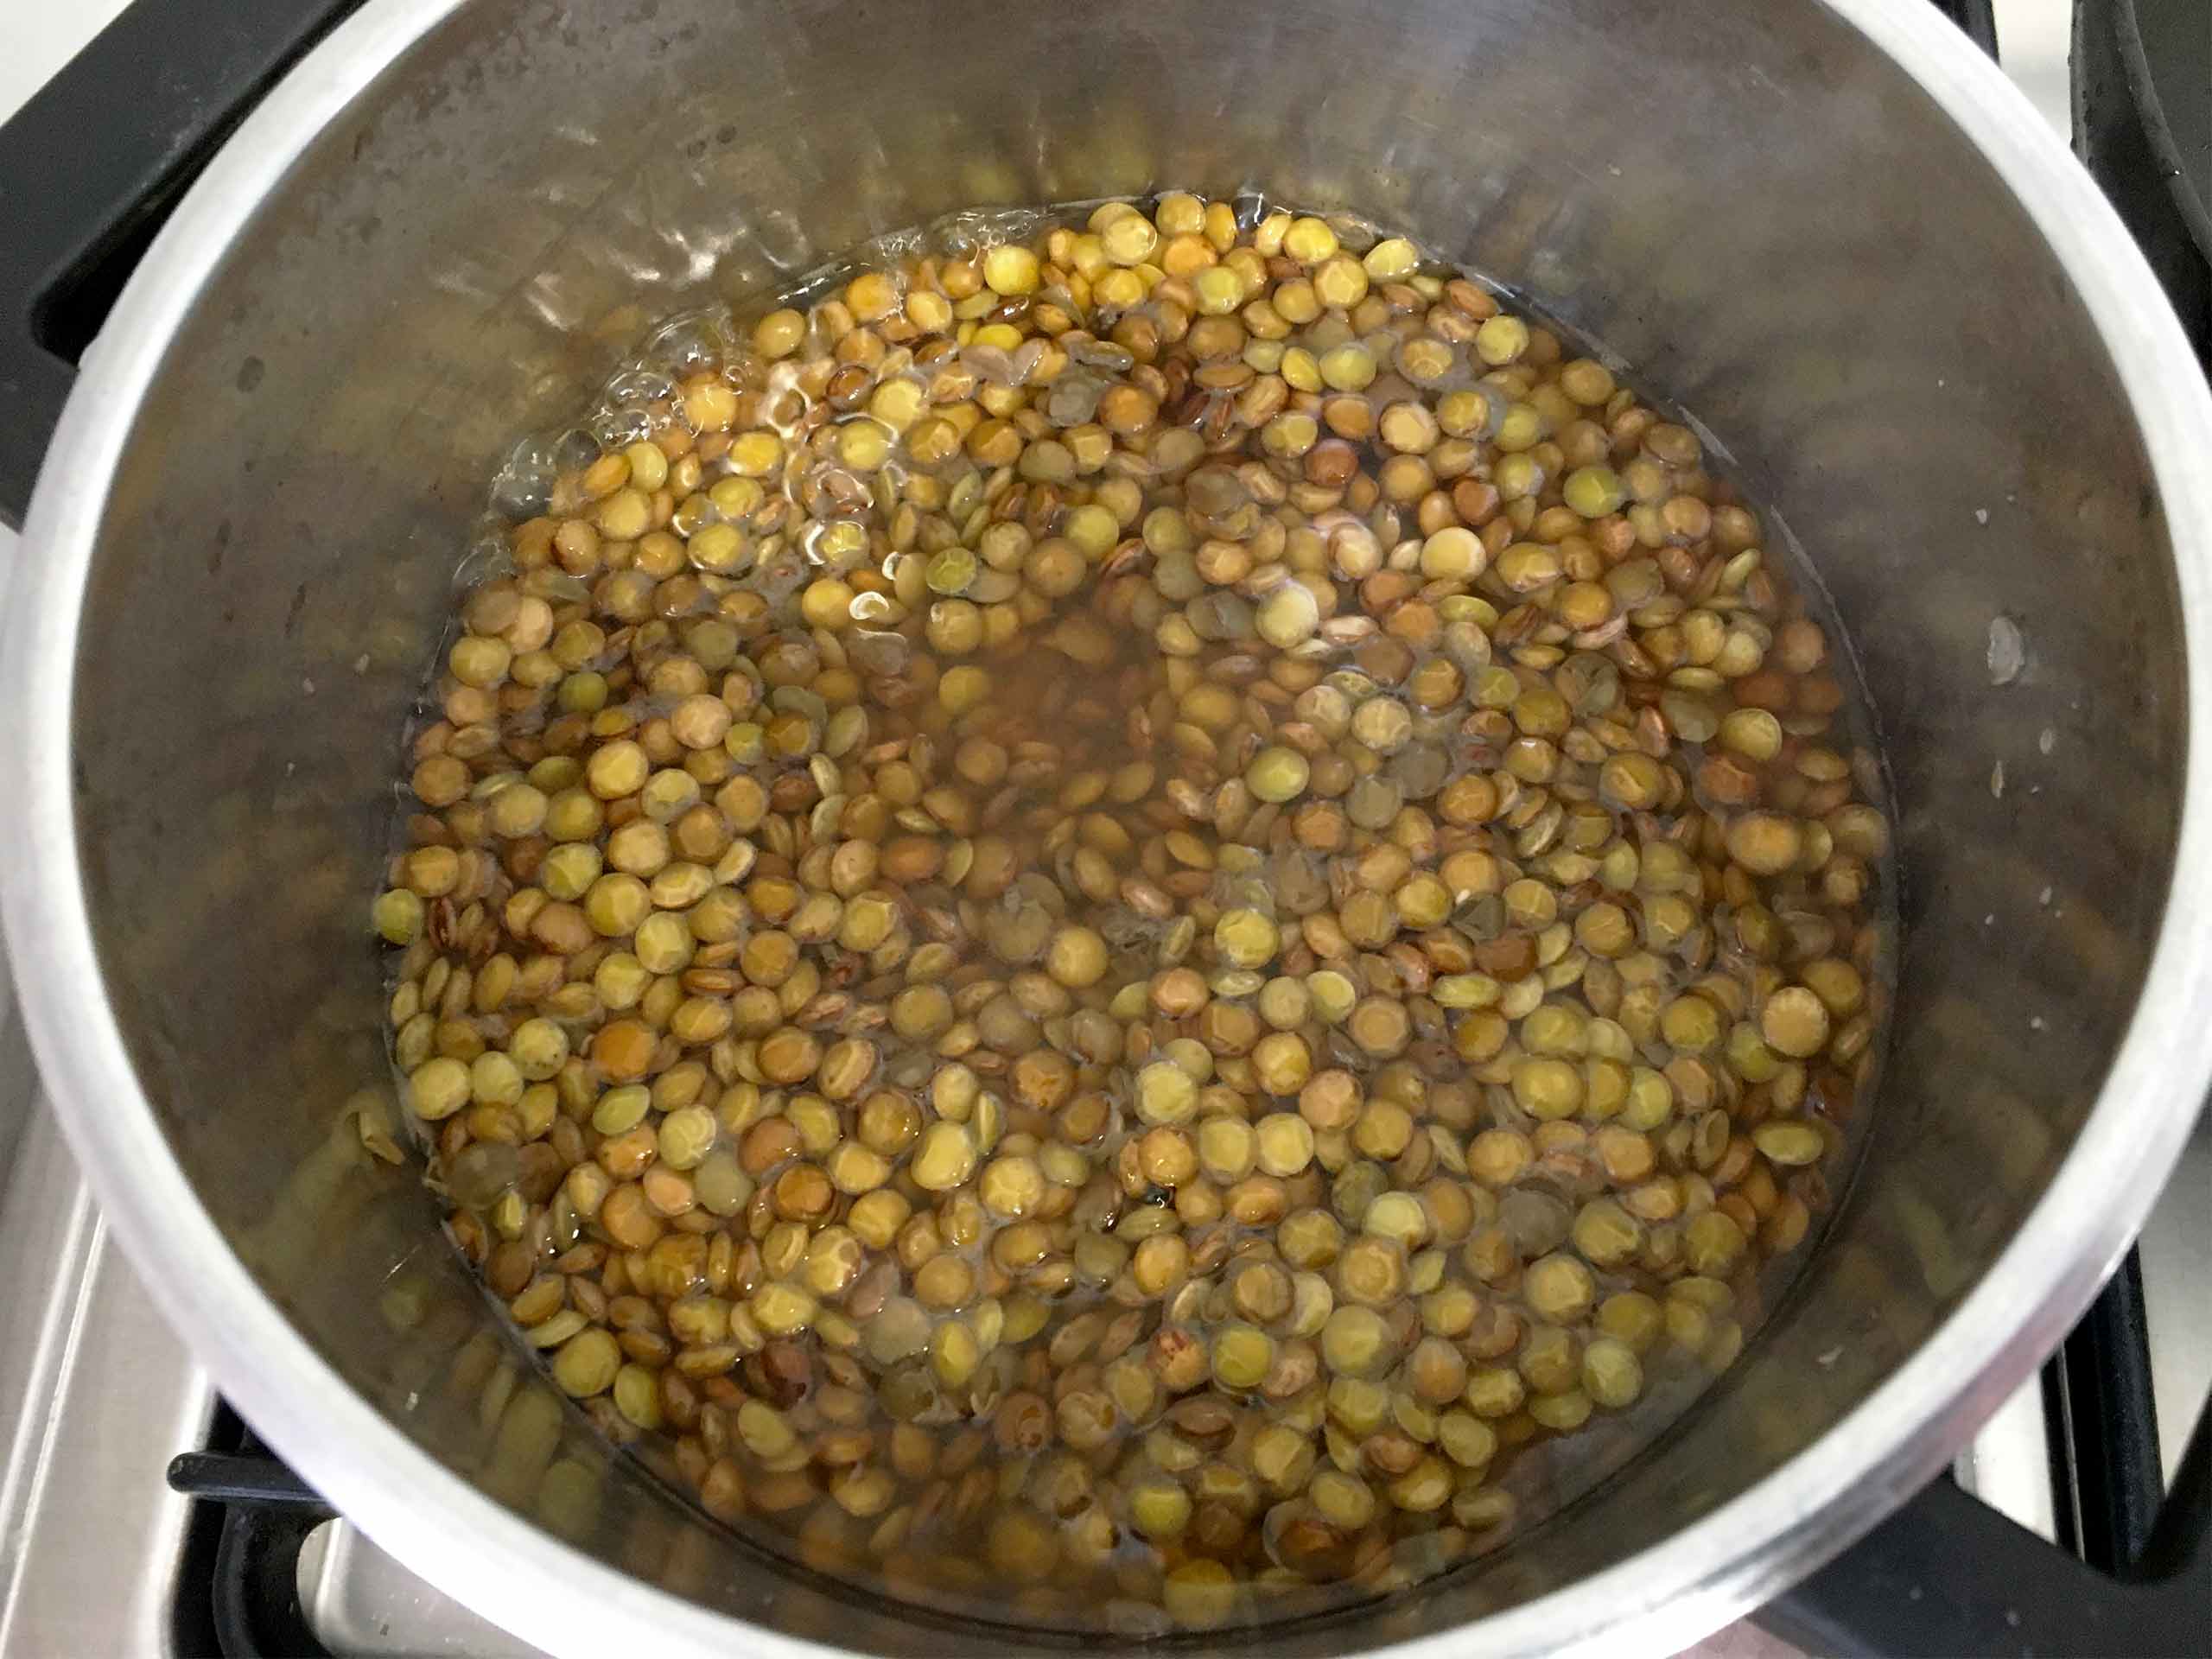 Mujadara cooking the lentils